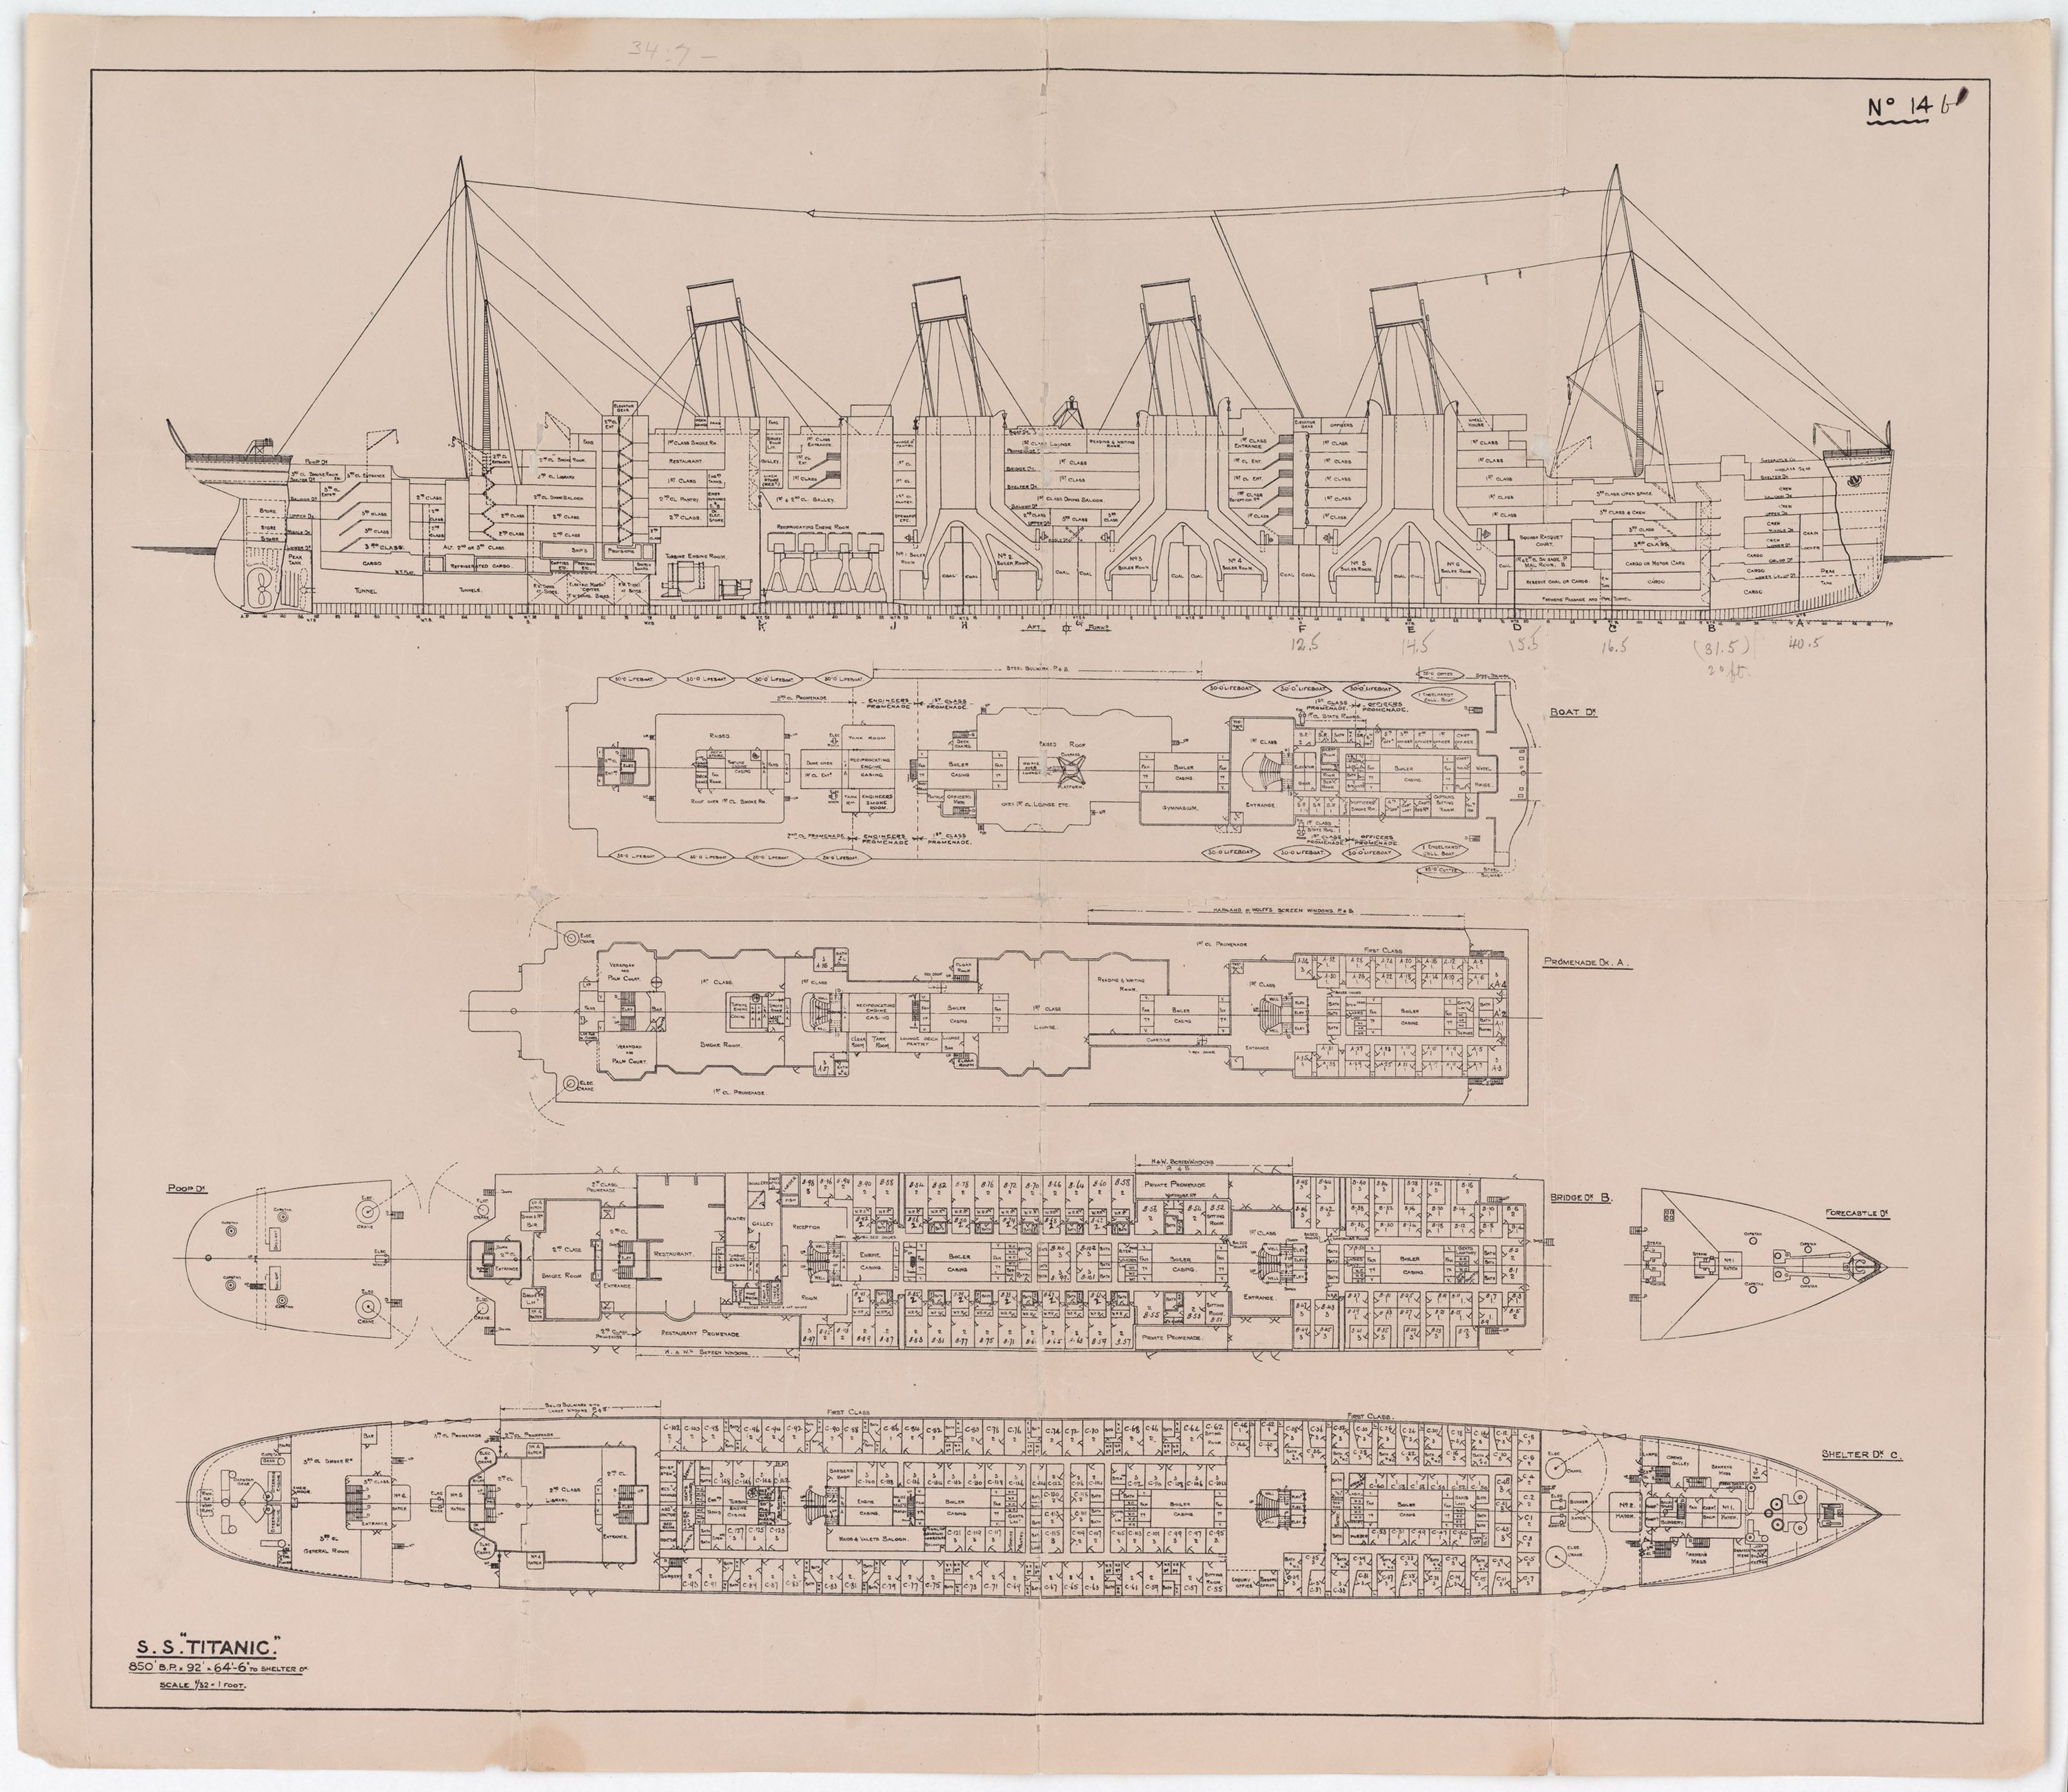 Profiles of the Titanic – Source: NARA’s Prologue Magazine